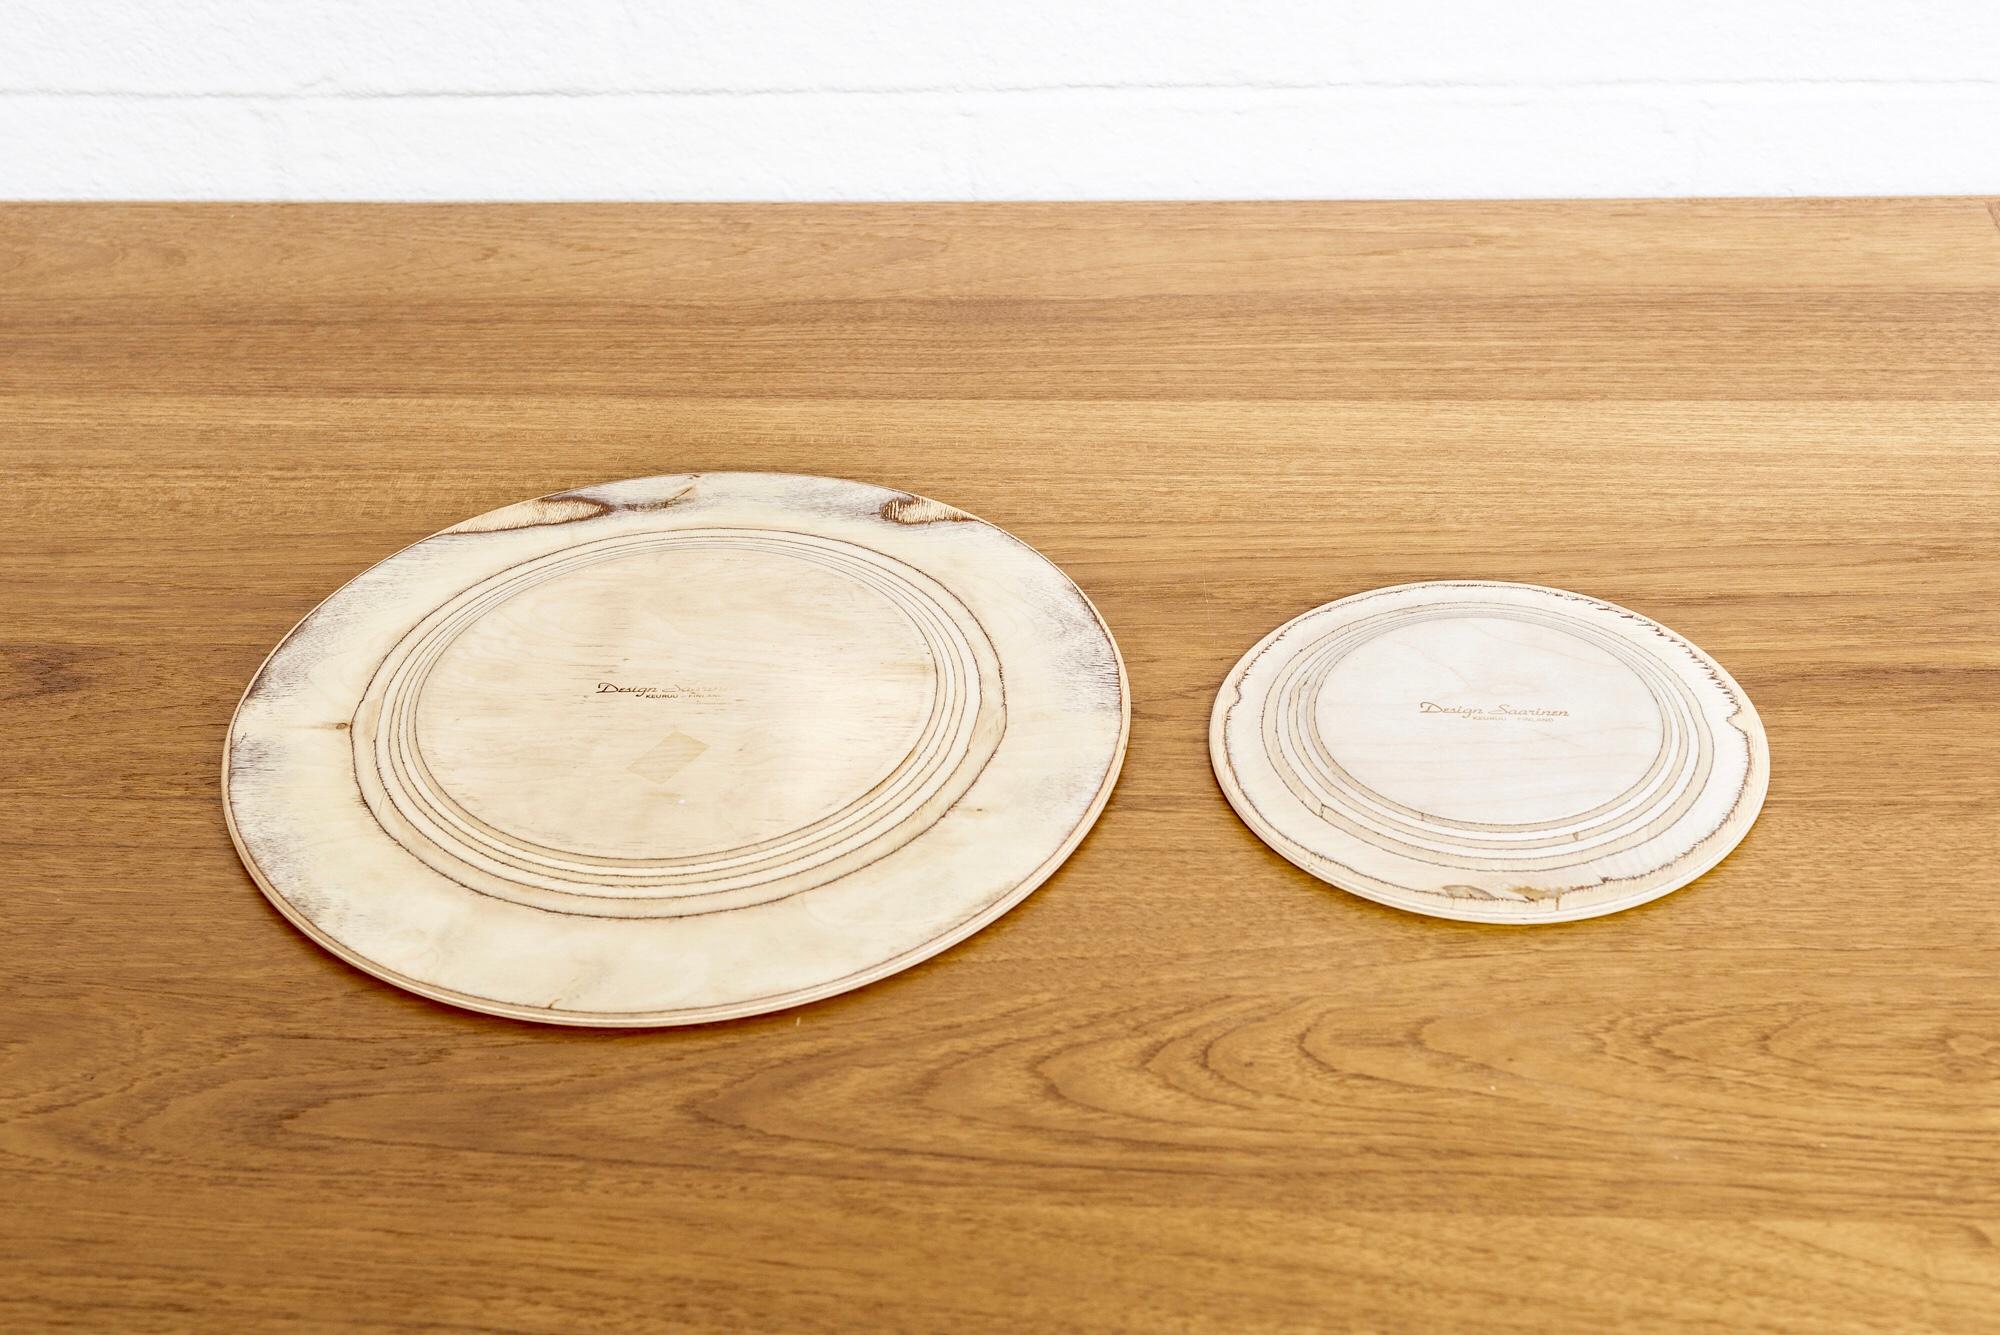 Midcentury Finnish Modern Wooden Plates by Saarinen for Keuruu 3